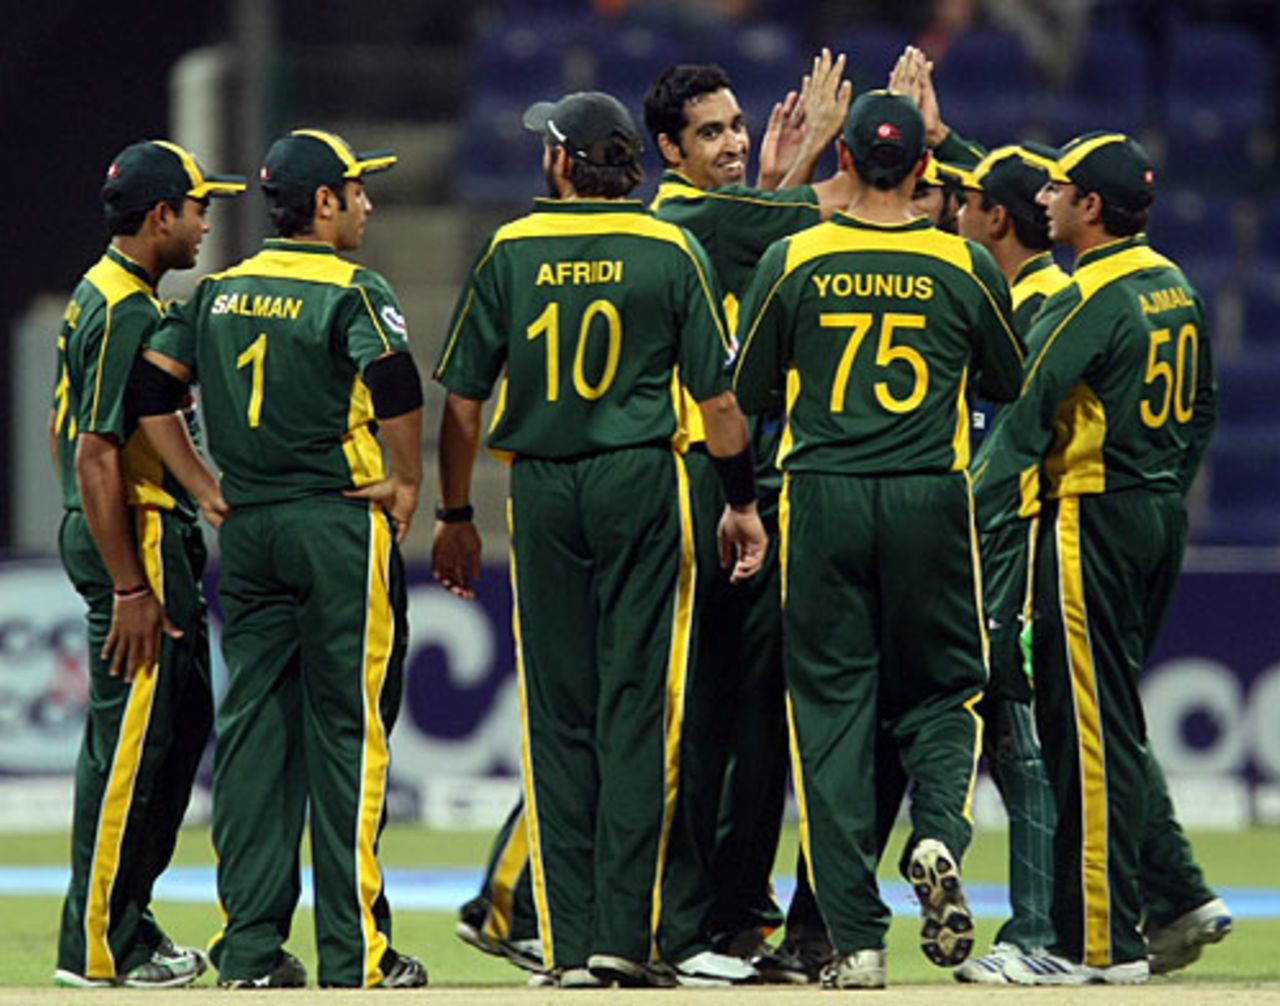 Team-mates gather to congratulate Umar Gul after Martin Guptill's dismissal, Pakistan v New Zealand, 1st ODI, Abu Dhabi, November 3, 2009